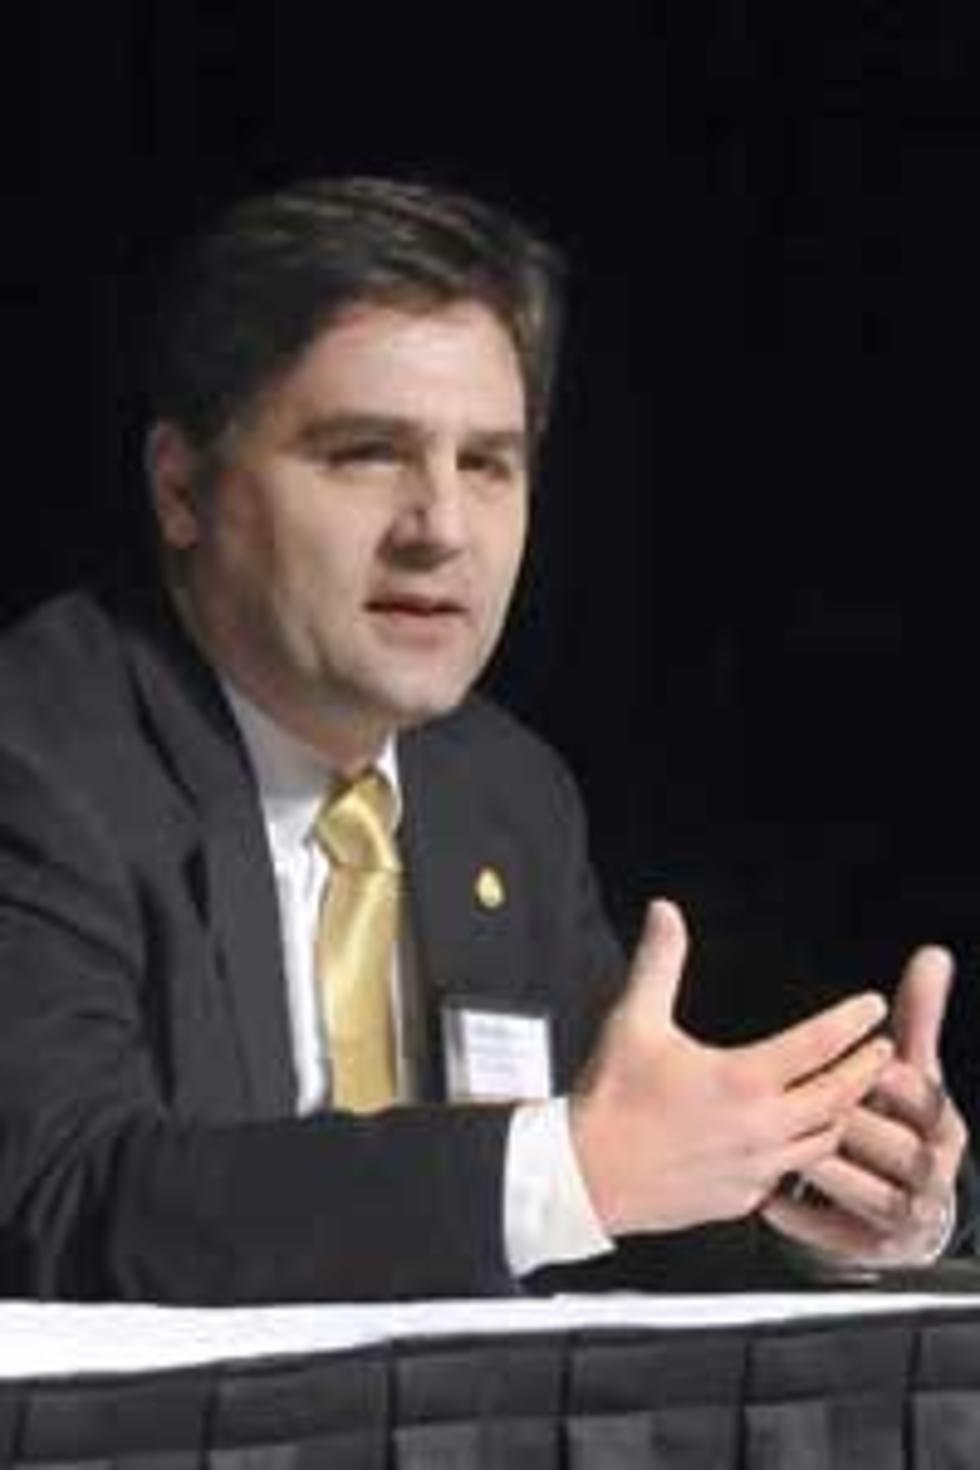 Renk Interviews Michigan Senator Patrick Colbeck about Education